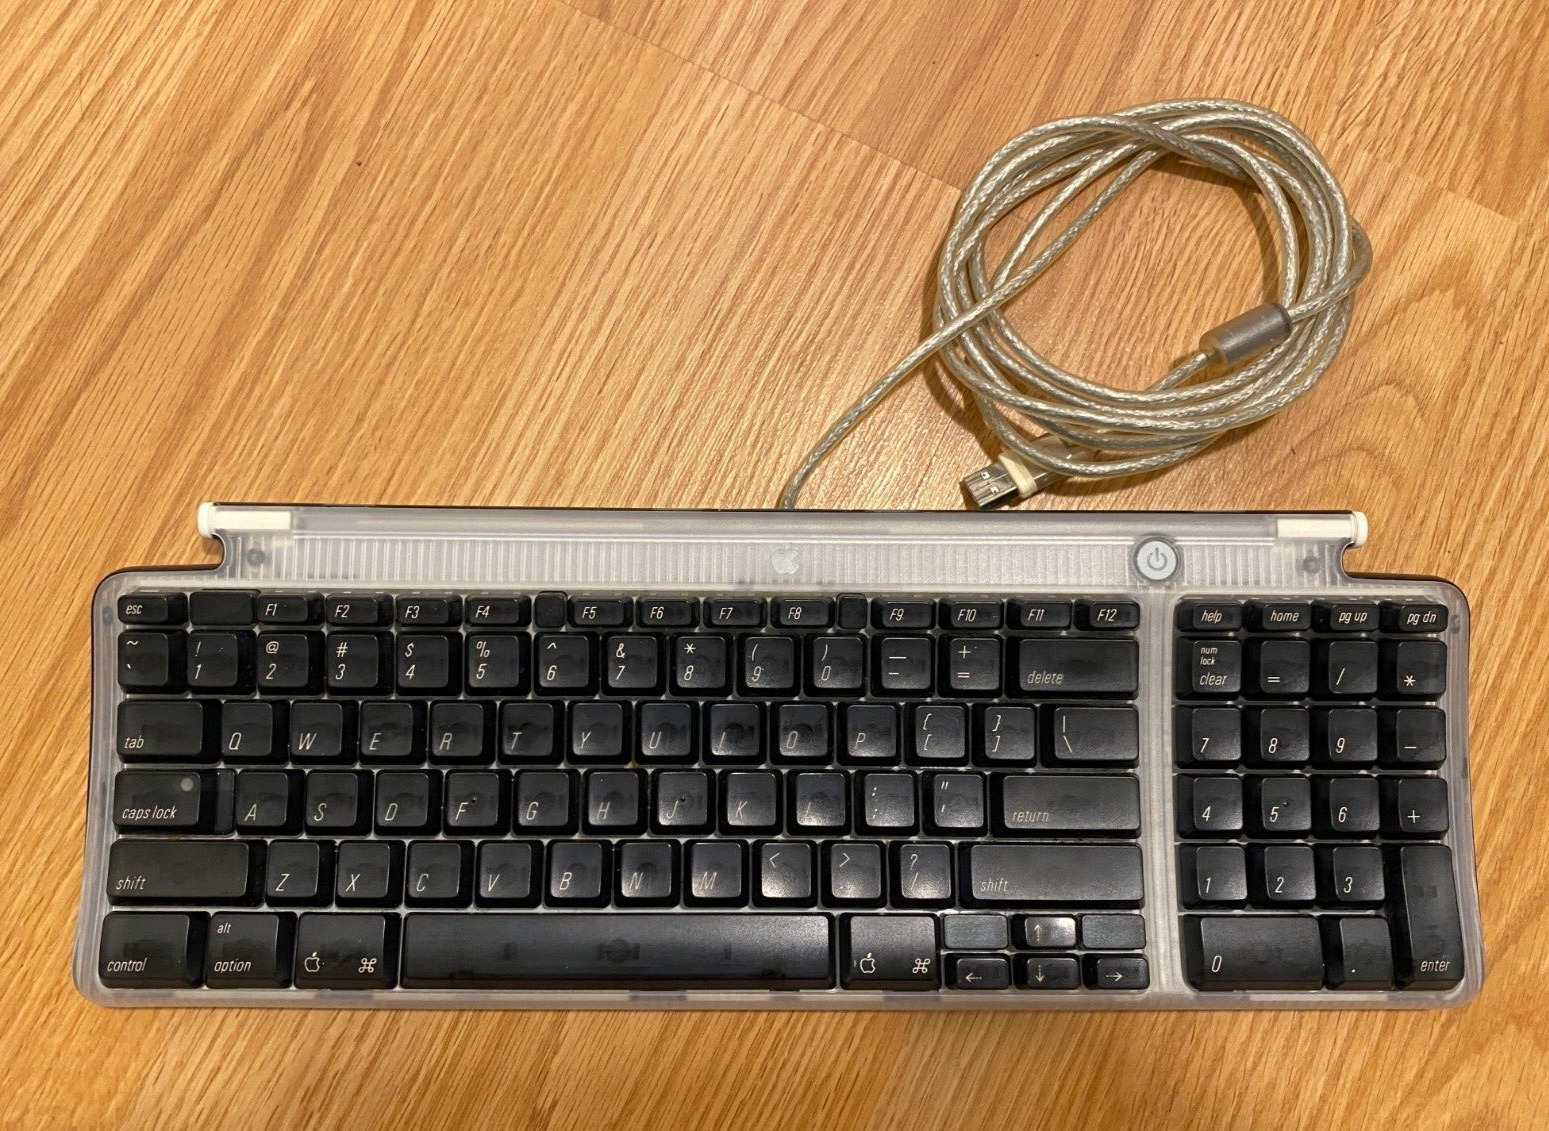 Vintage Apple USB Keyboard M2452 iMac Power Mac G3 G4 G5 - Tested